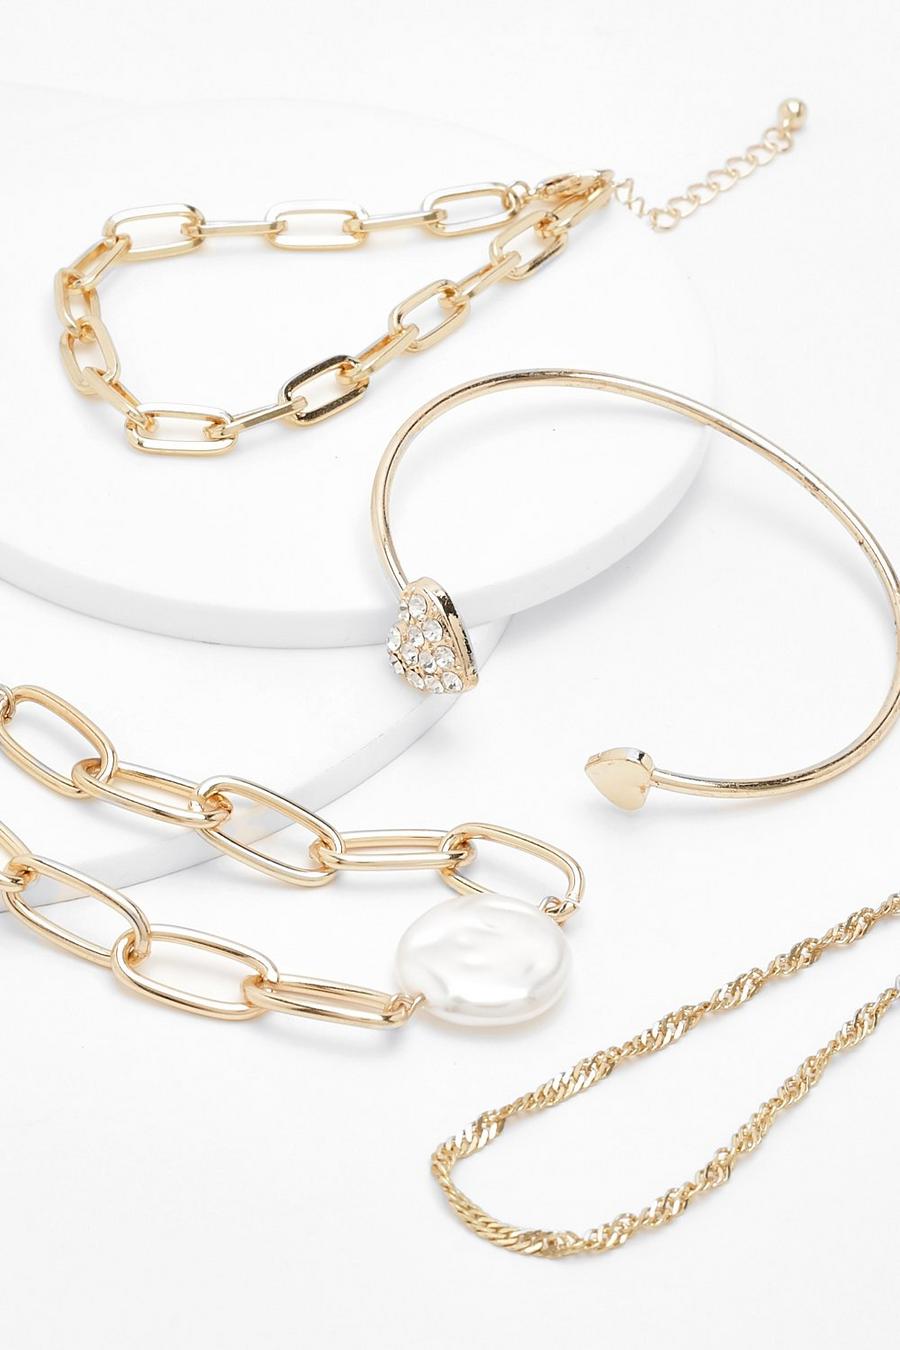 Klobiges Perlen-Armband Set, Gold